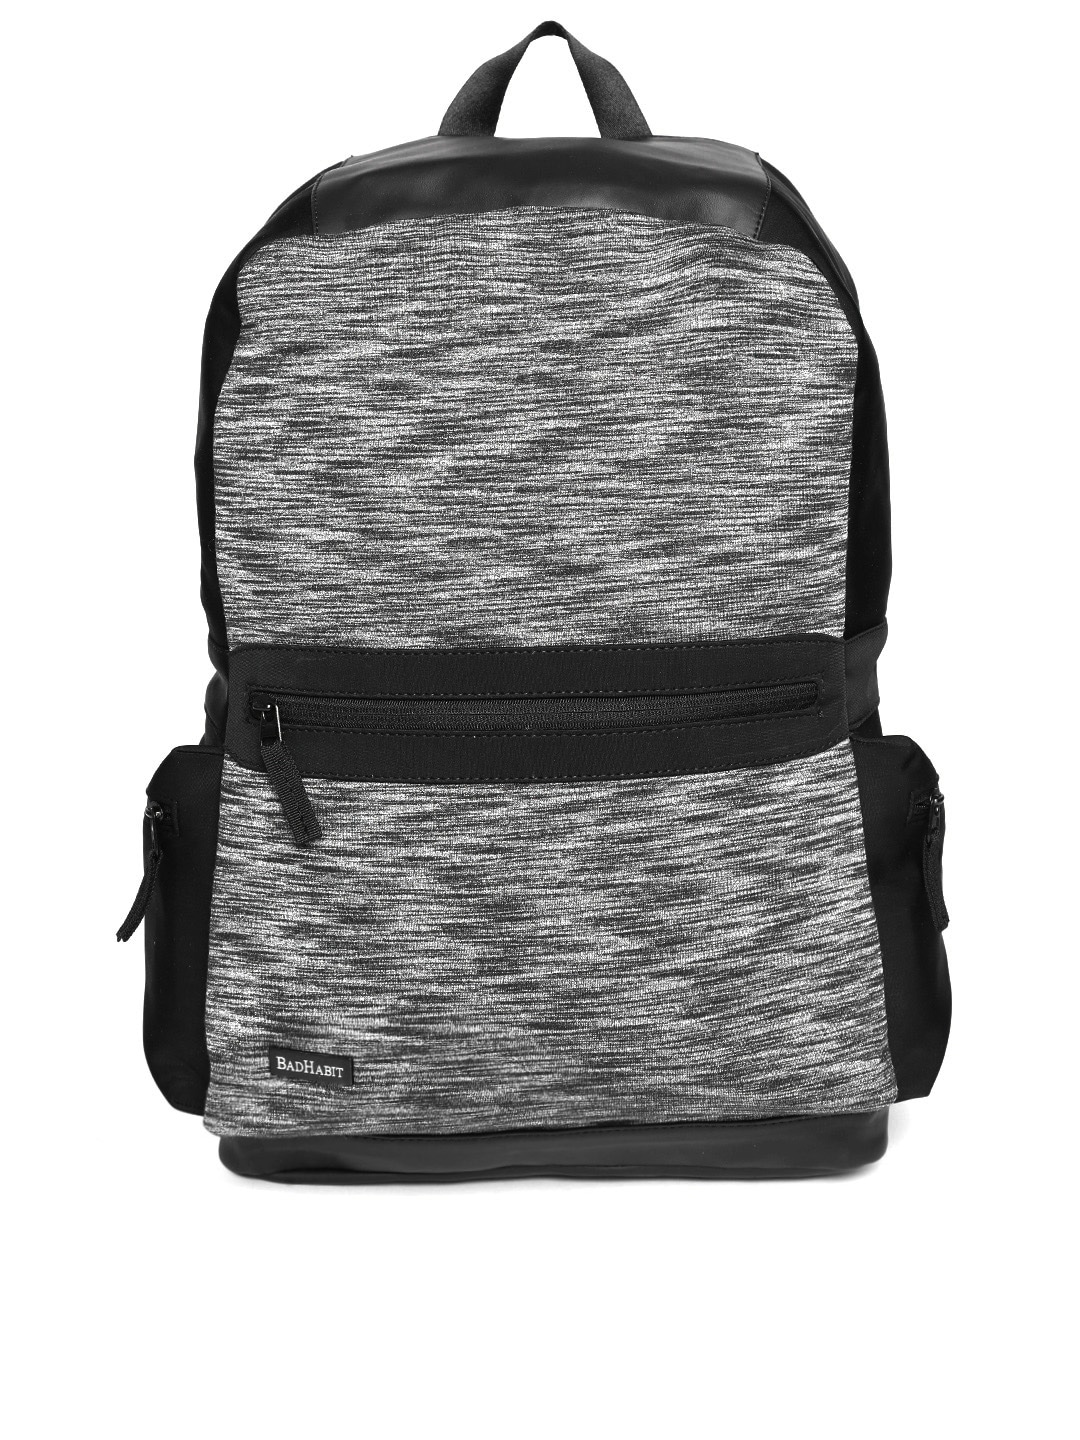 BAD HABIT Unisex Black & Grey Backpack Price in India